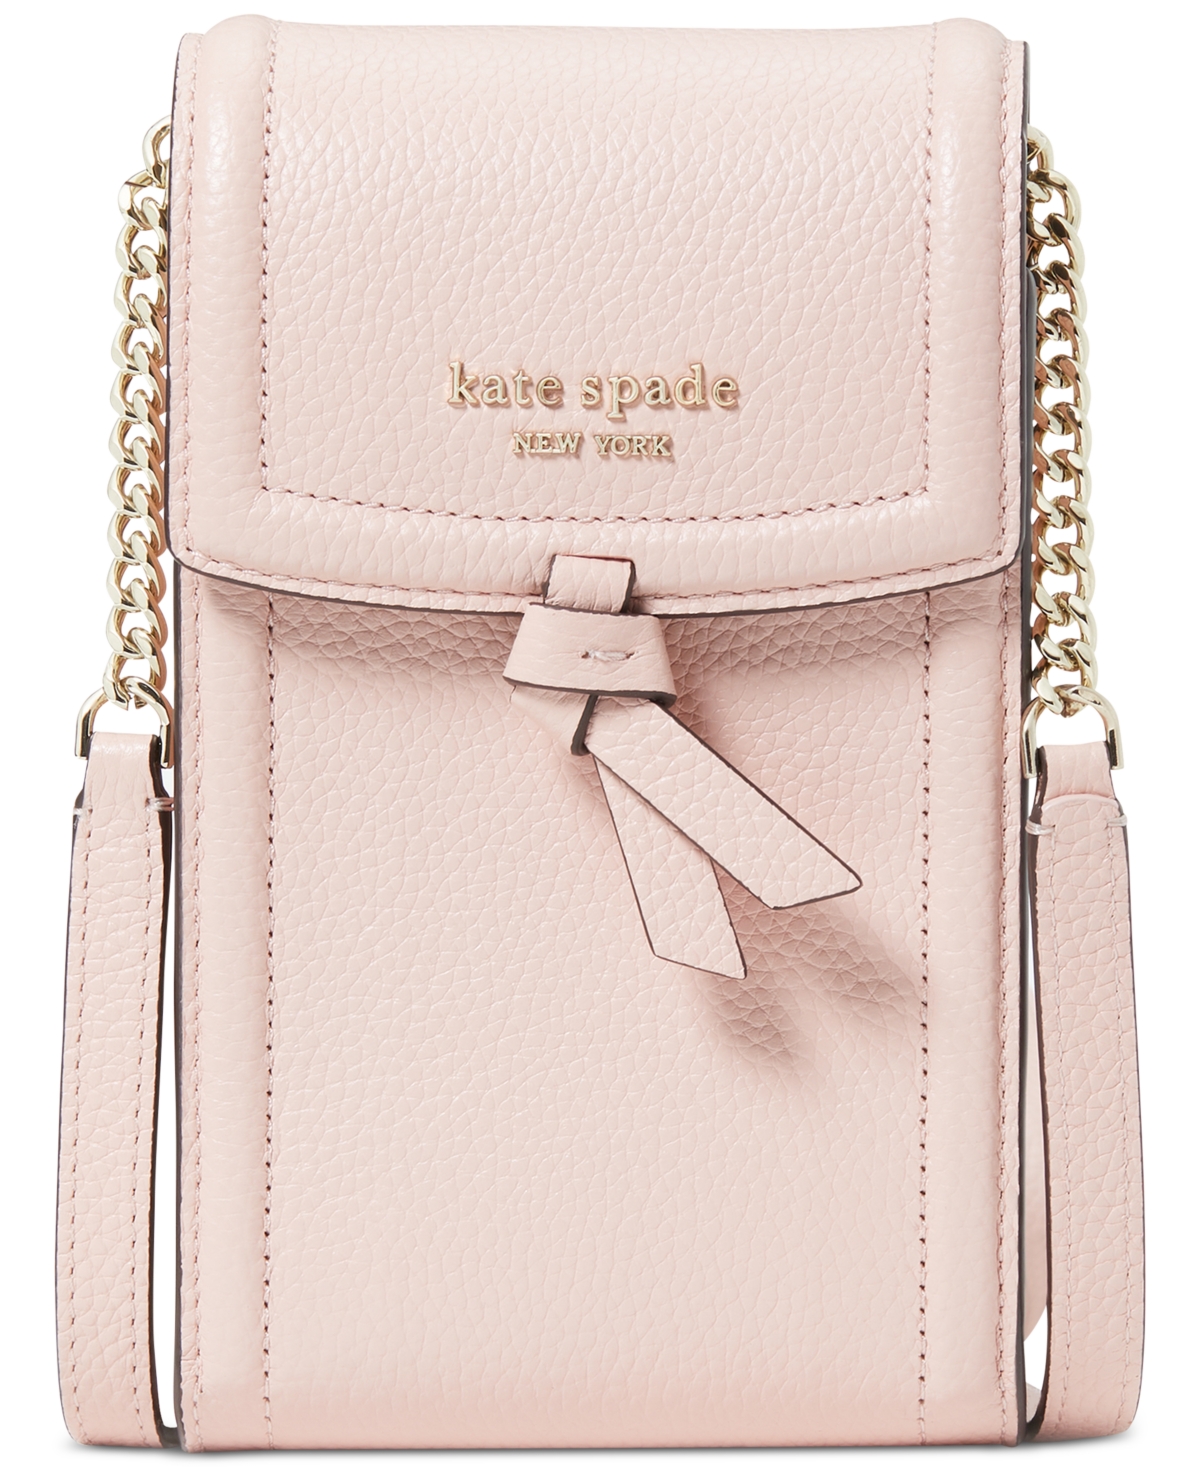 NWT AUTH $348 Kate Spade New York Knott Medium Leather Shoulder Bag-Mochi  Pink